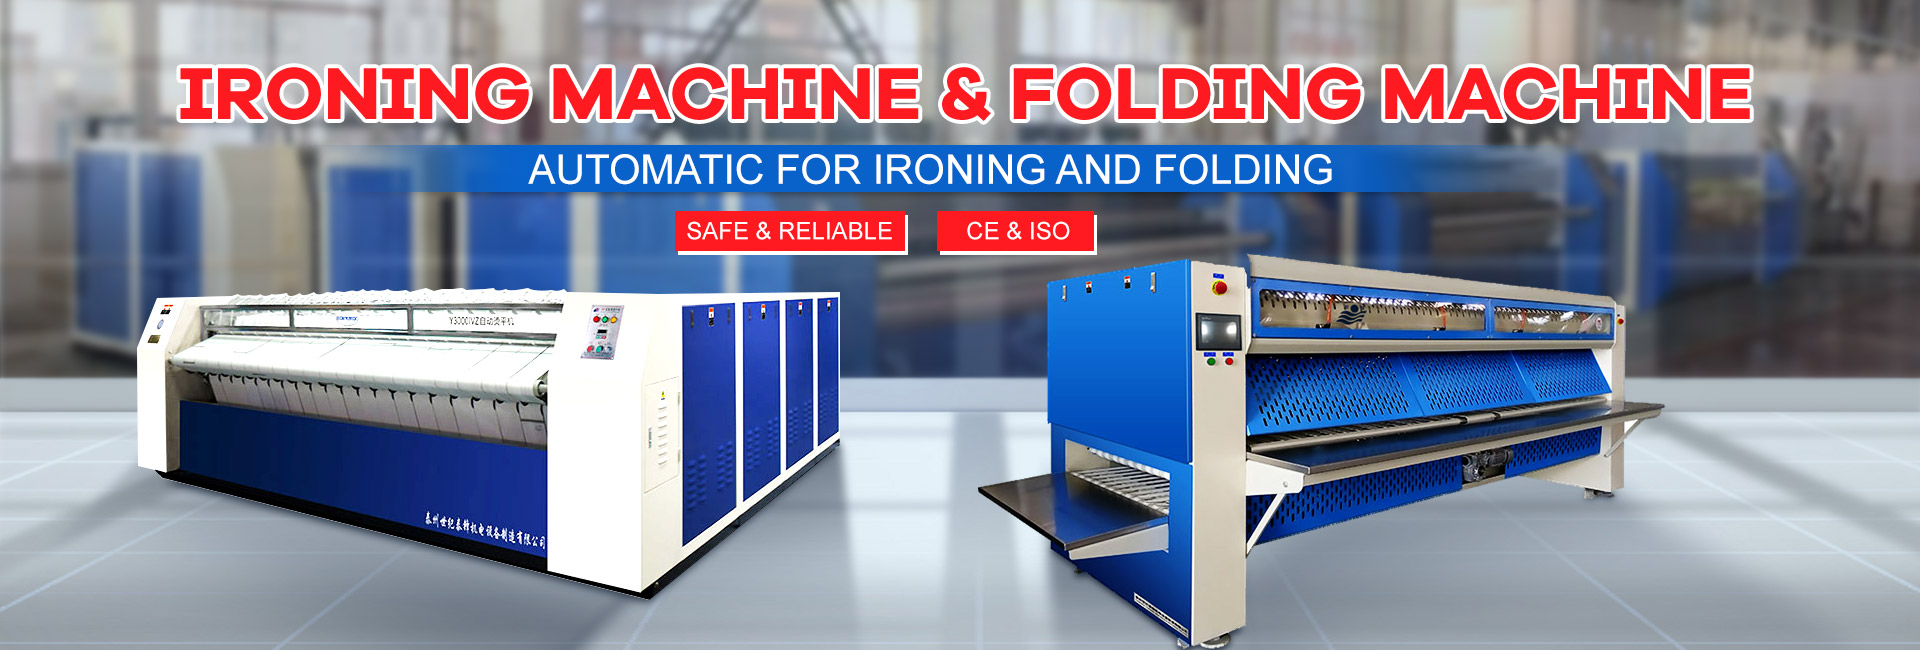 Ironing Machine & Folding Machine